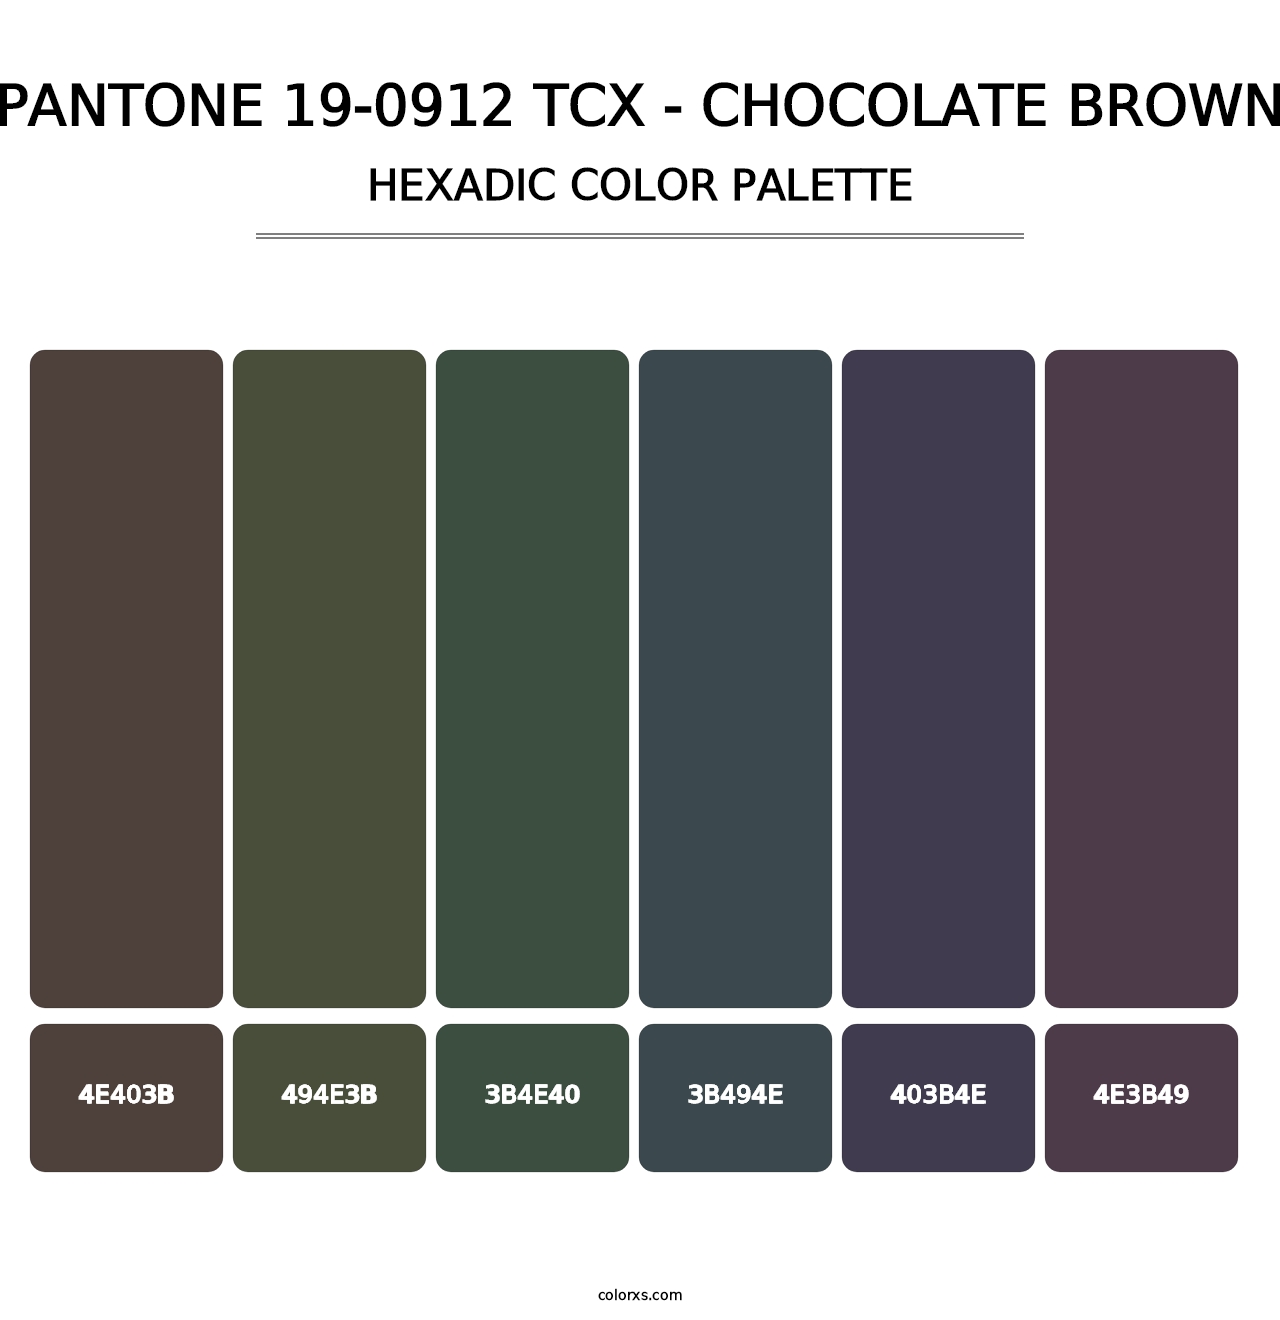 PANTONE 19-0912 TCX - Chocolate Brown - Hexadic Color Palette